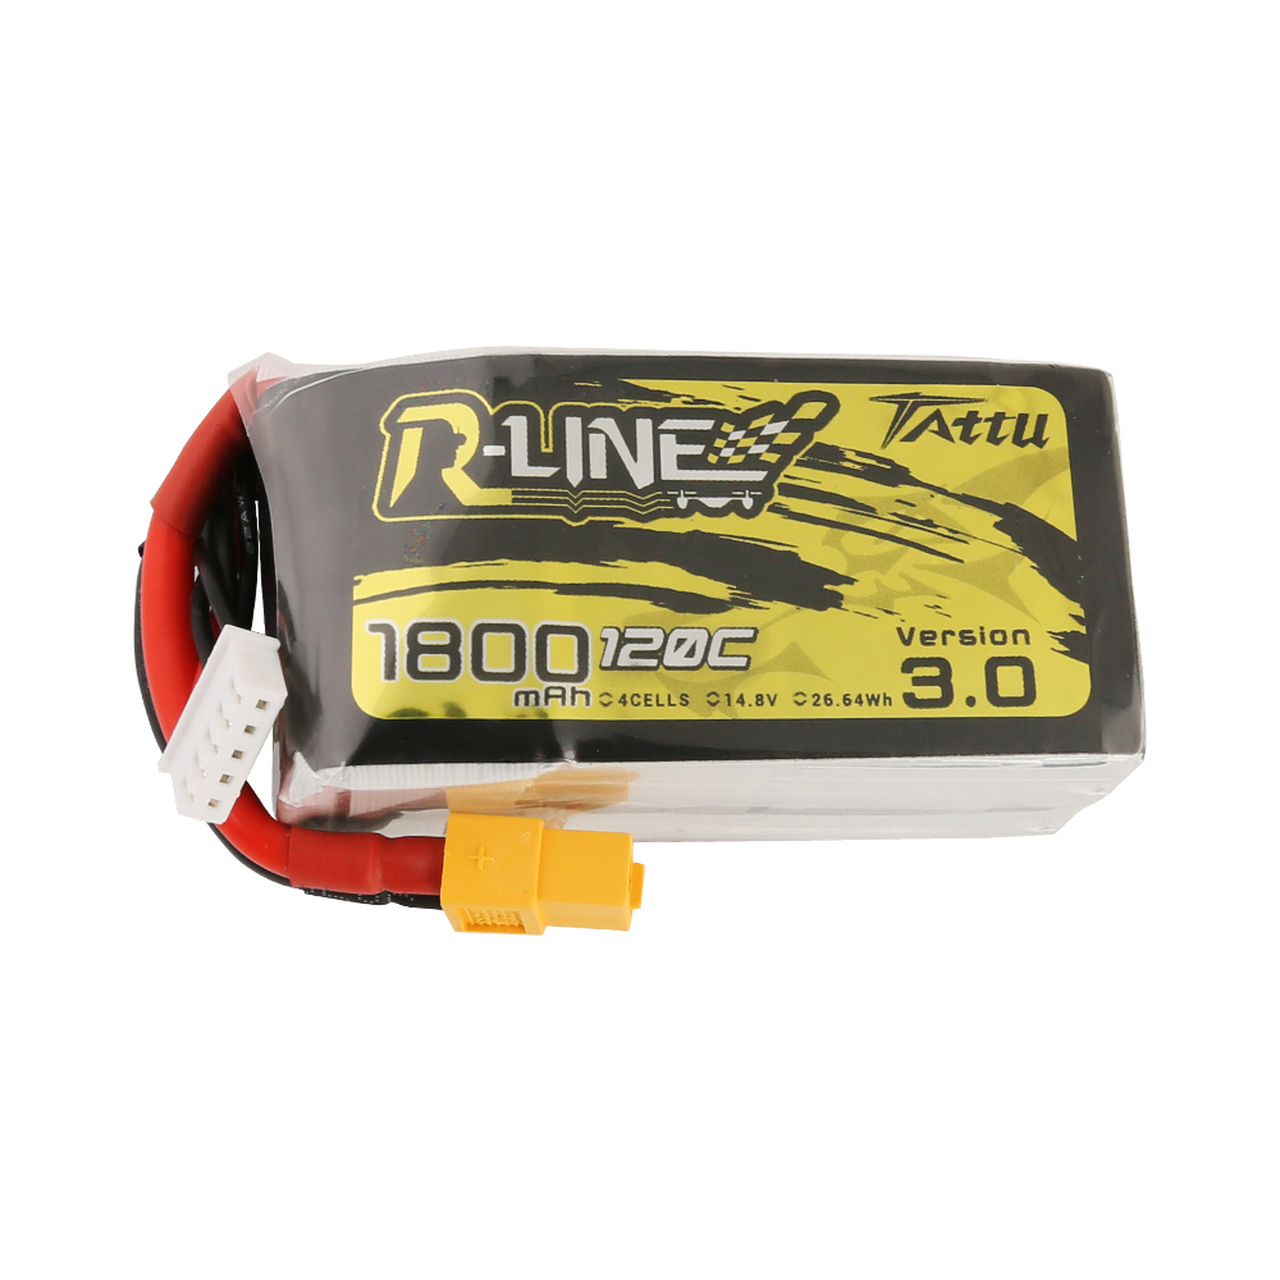 Tattu R-Line Version 3.0 1800mAh 14.8V 120C 4S1P Lipo Battery Pack with XT60 Plug